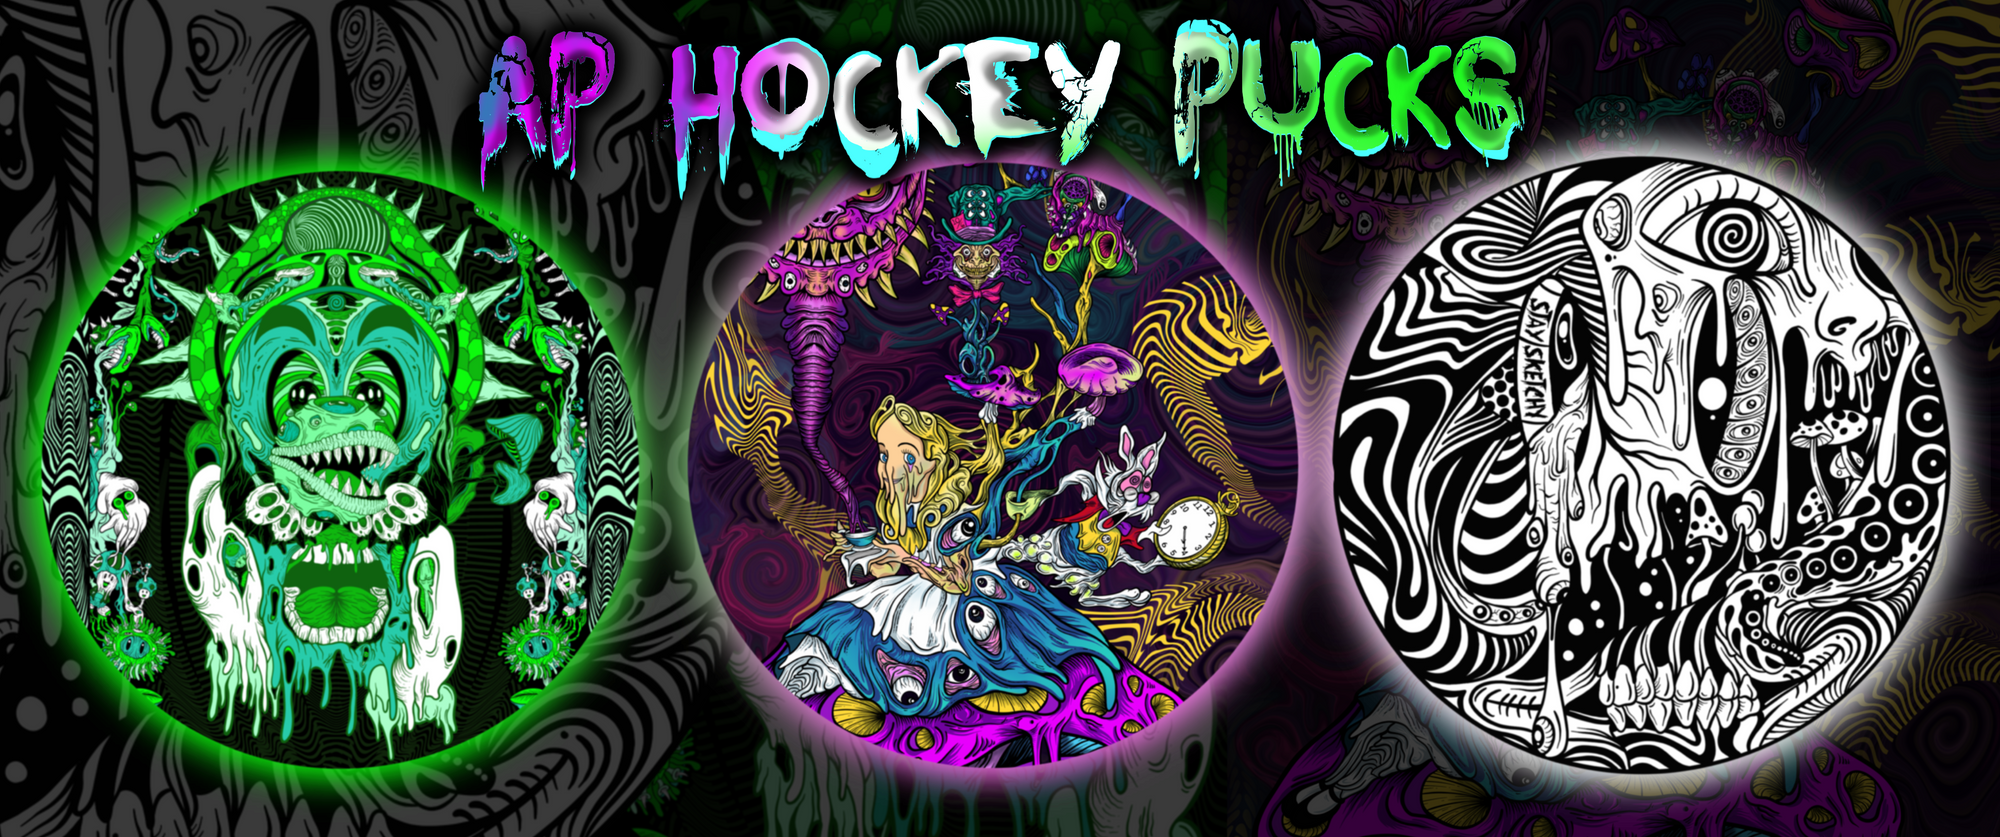 Hockey Pucks / Poster Weights (APs)